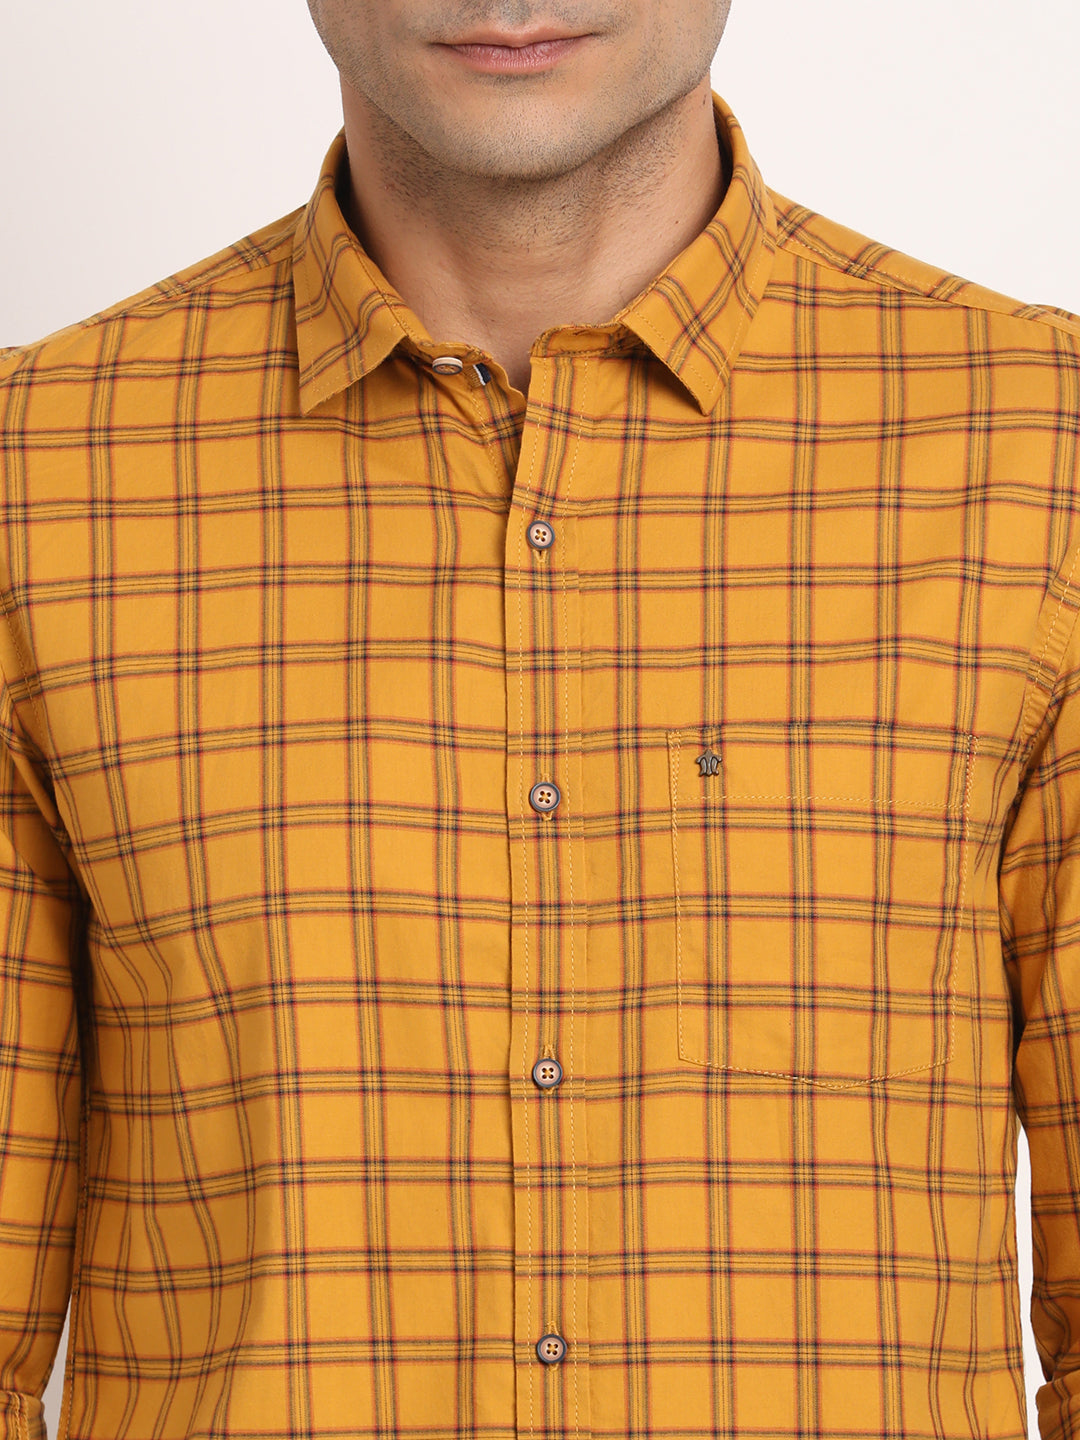 Cotton Yellow Checkered Full Sleeve Casual Shirt